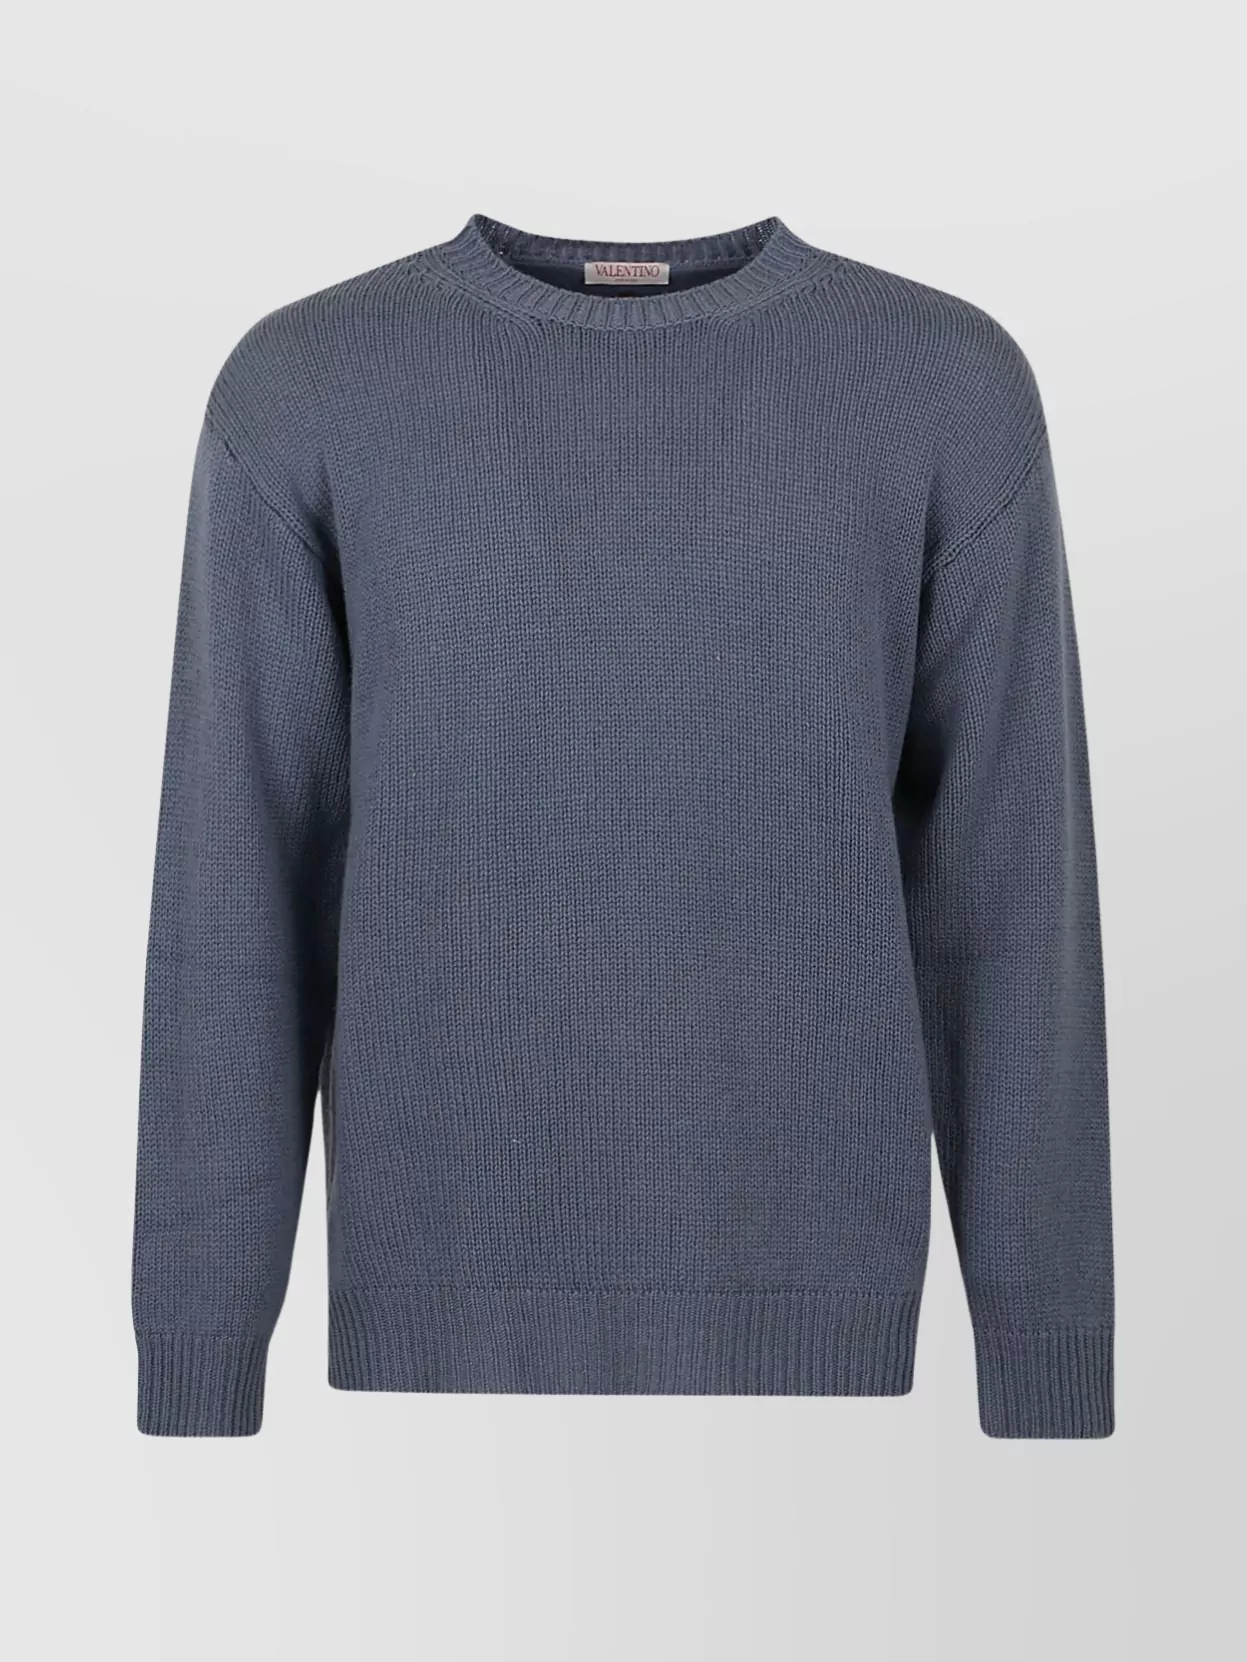 Valentino Cashmere Sweater In Grey